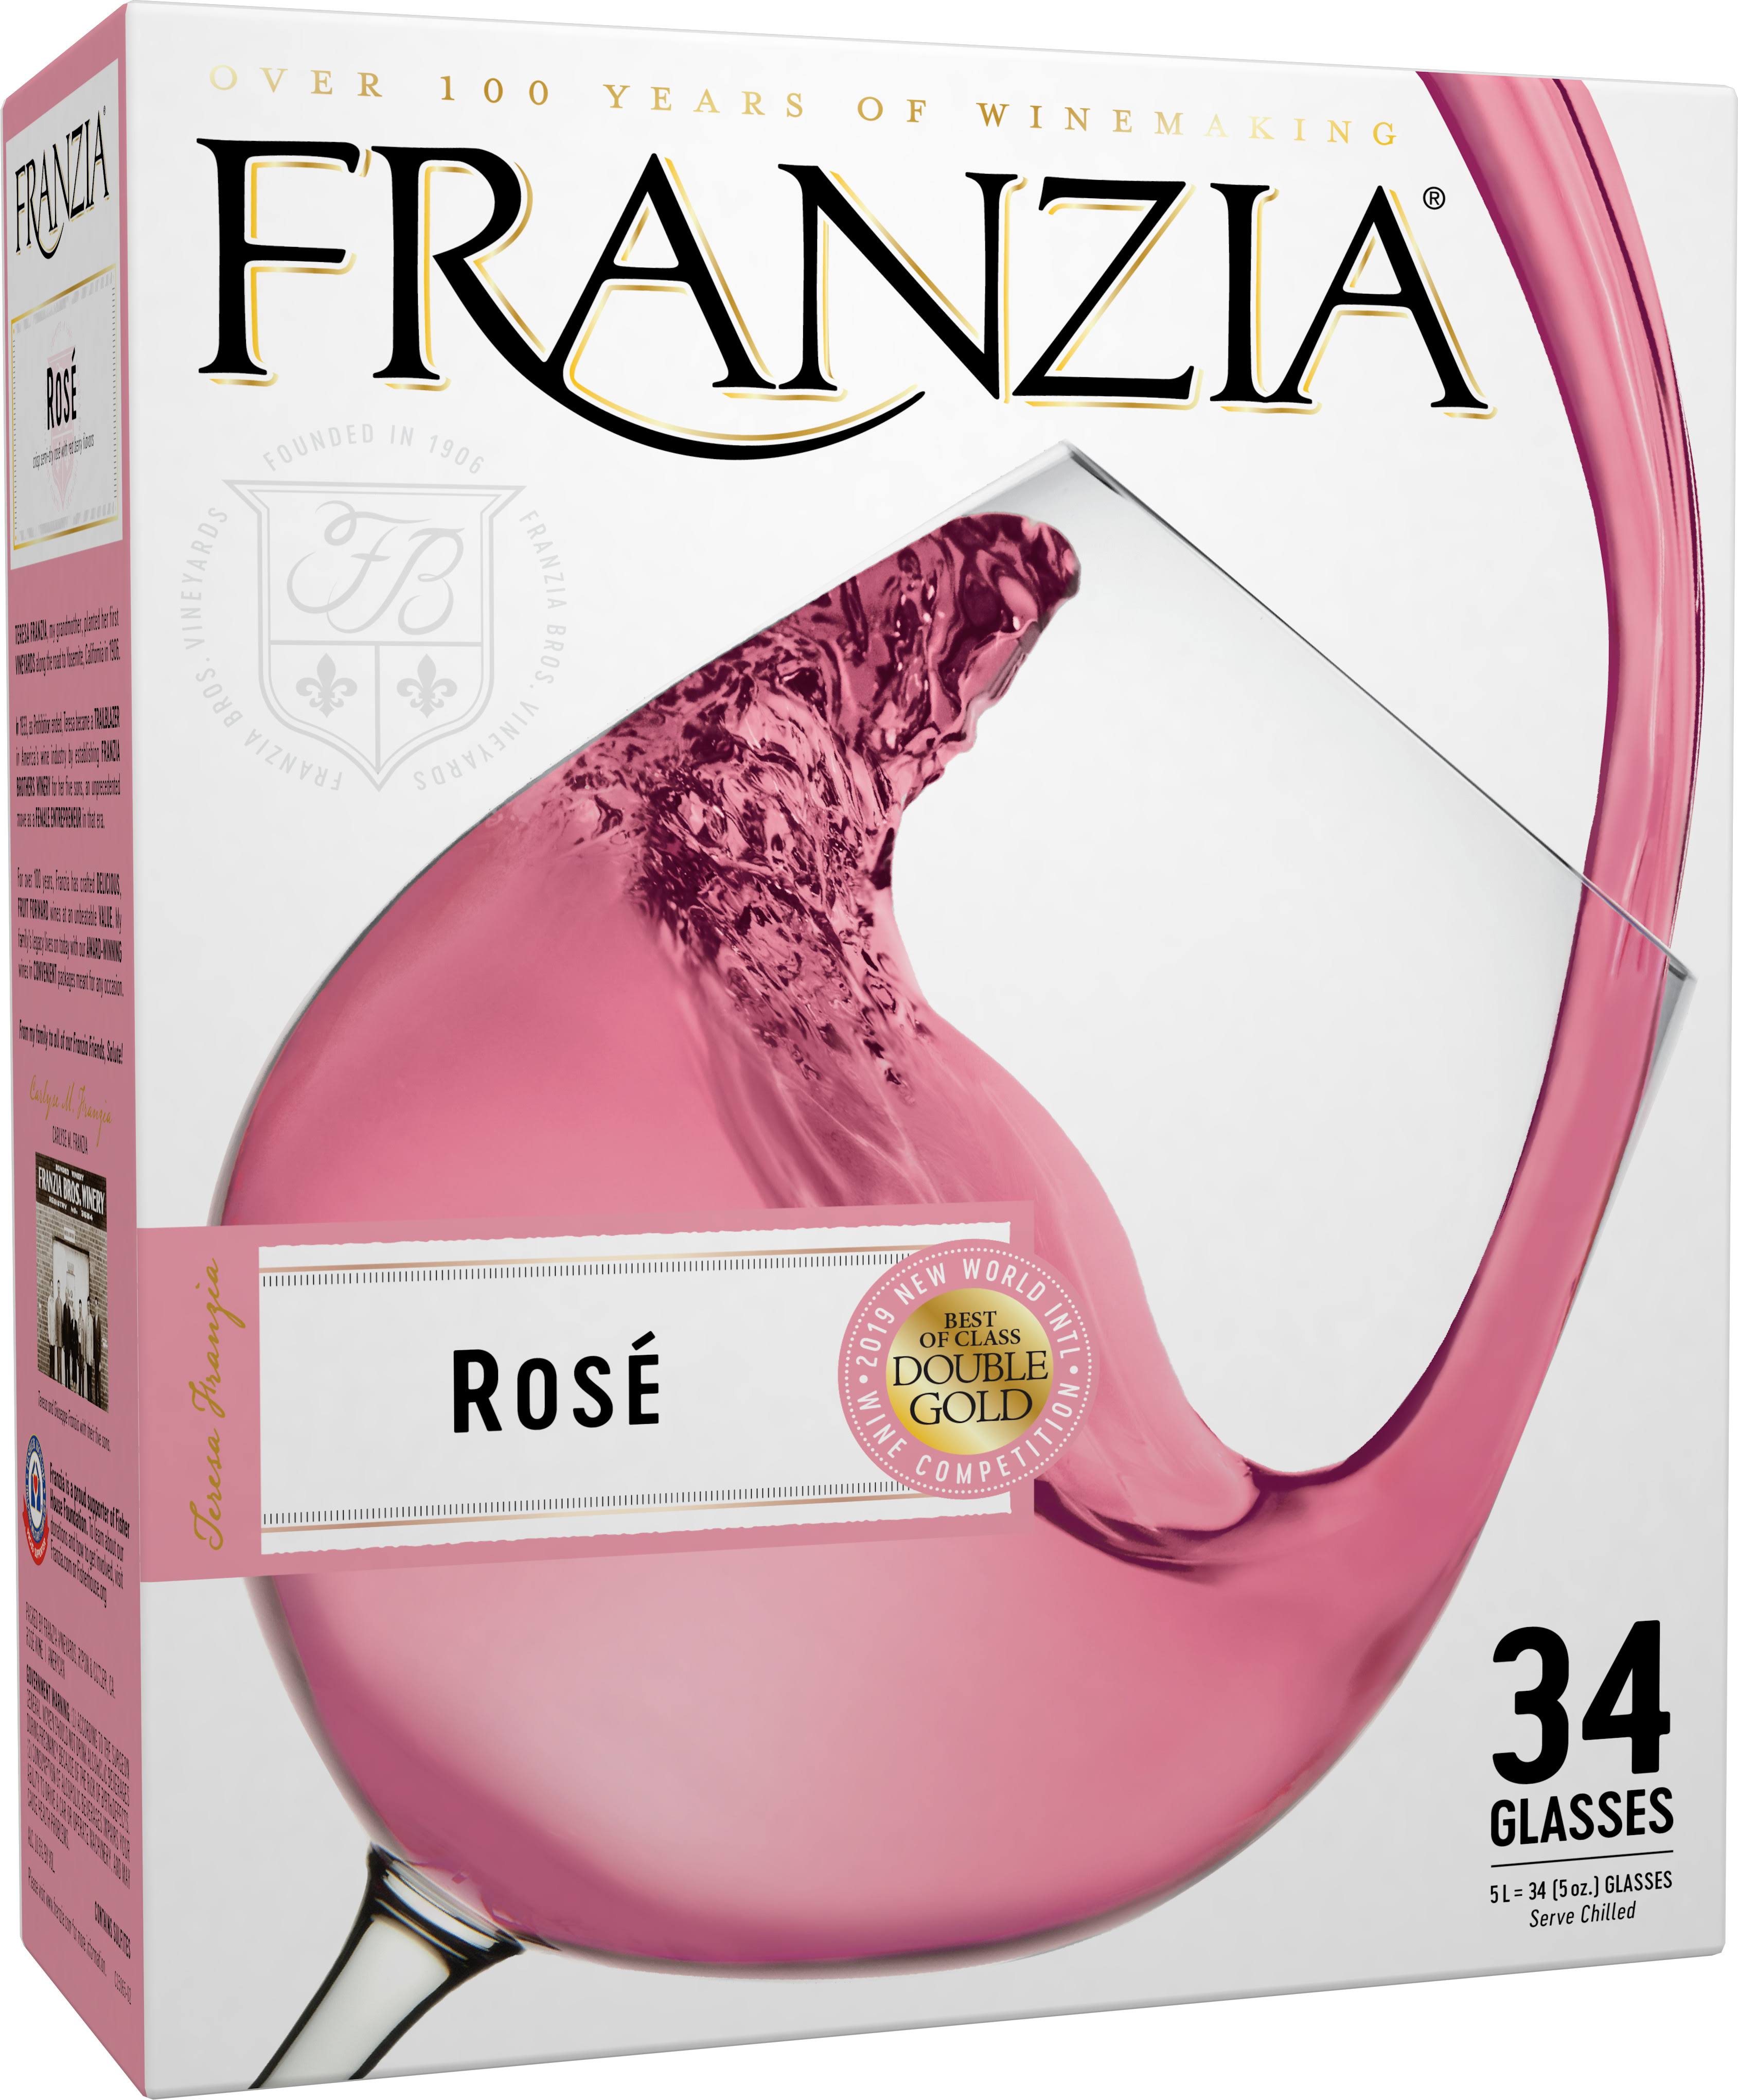 Franzia Rose - 5 liters